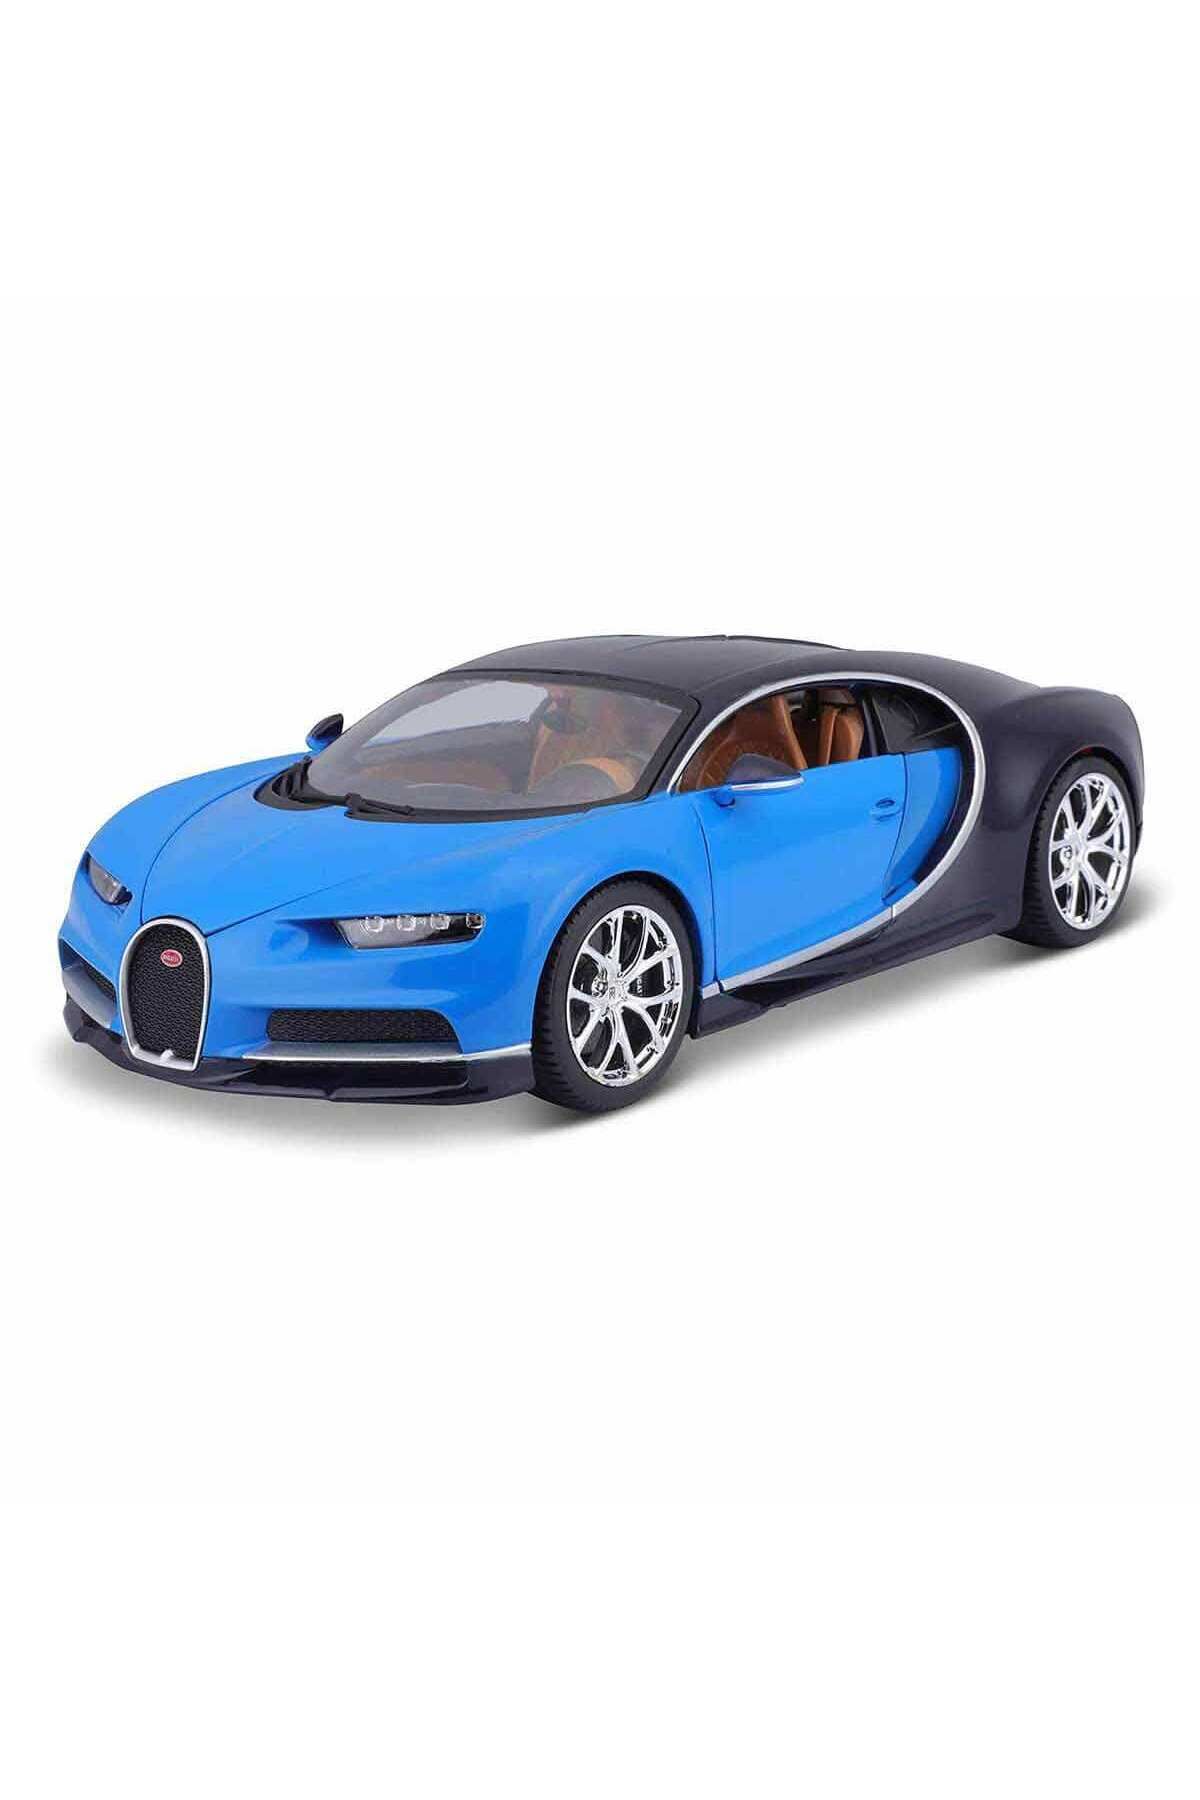 Burago 1:18 Bugatti Chiron Model Araba - Mavi-Siyah